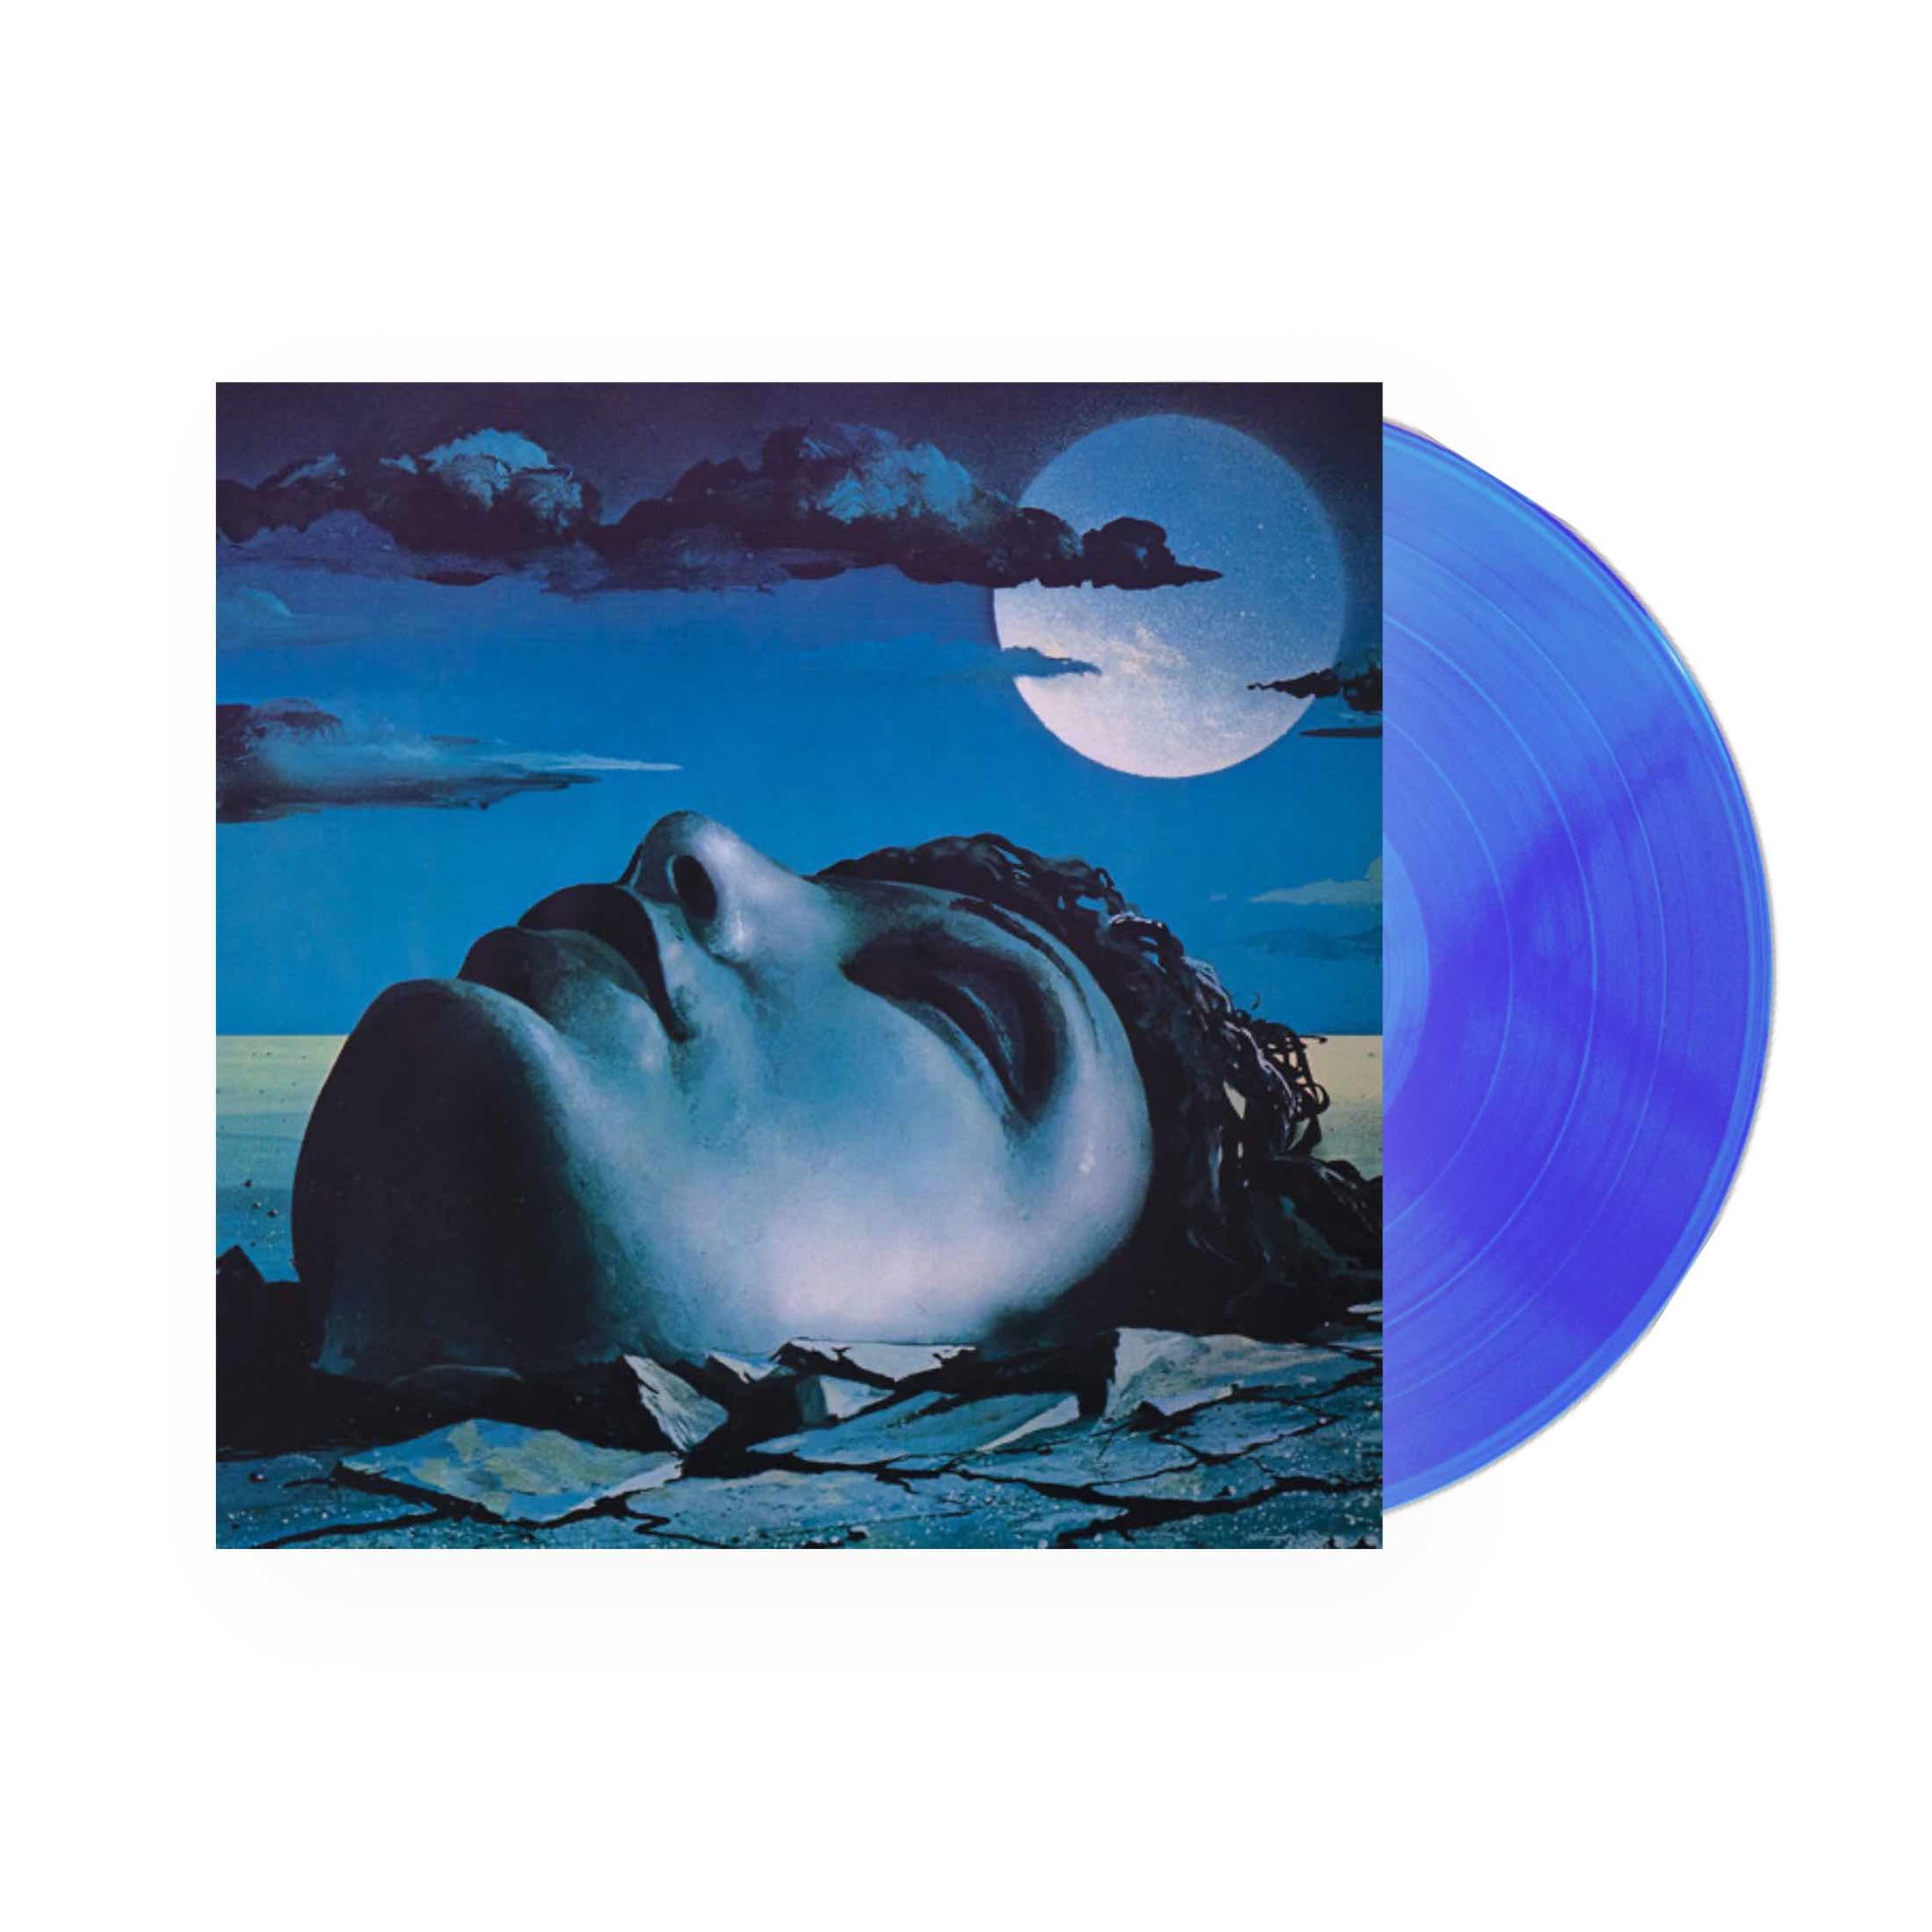 Joseph Renzetti - Dead and Buried (Original Motion Picture Soundtrack) LP (Blue Vinyl)